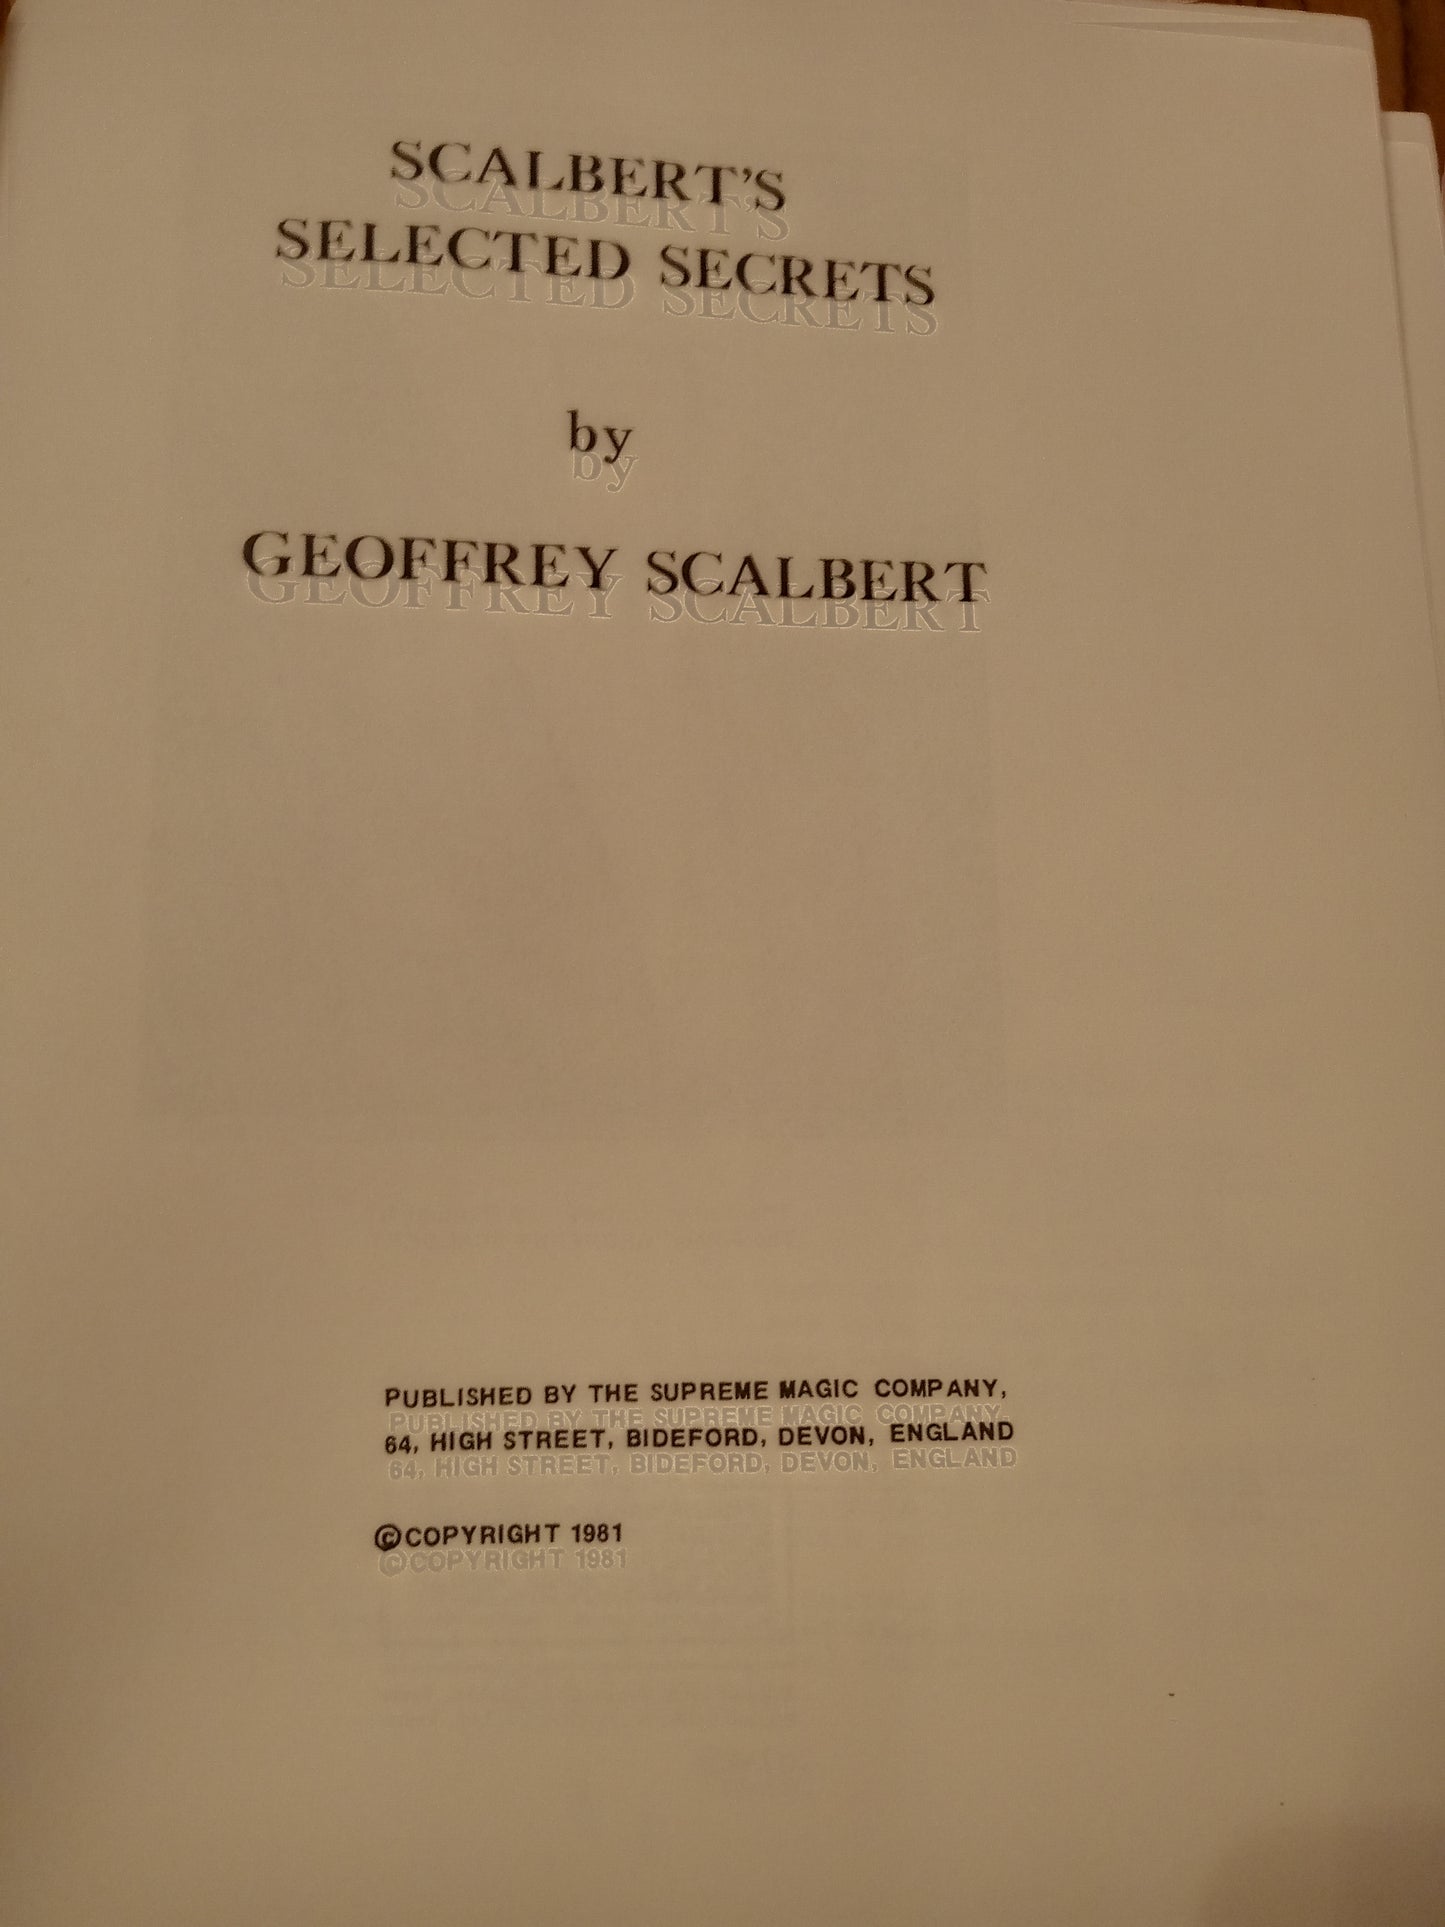 Scalbert's Selected Secrets by Geoffrey Scalbert